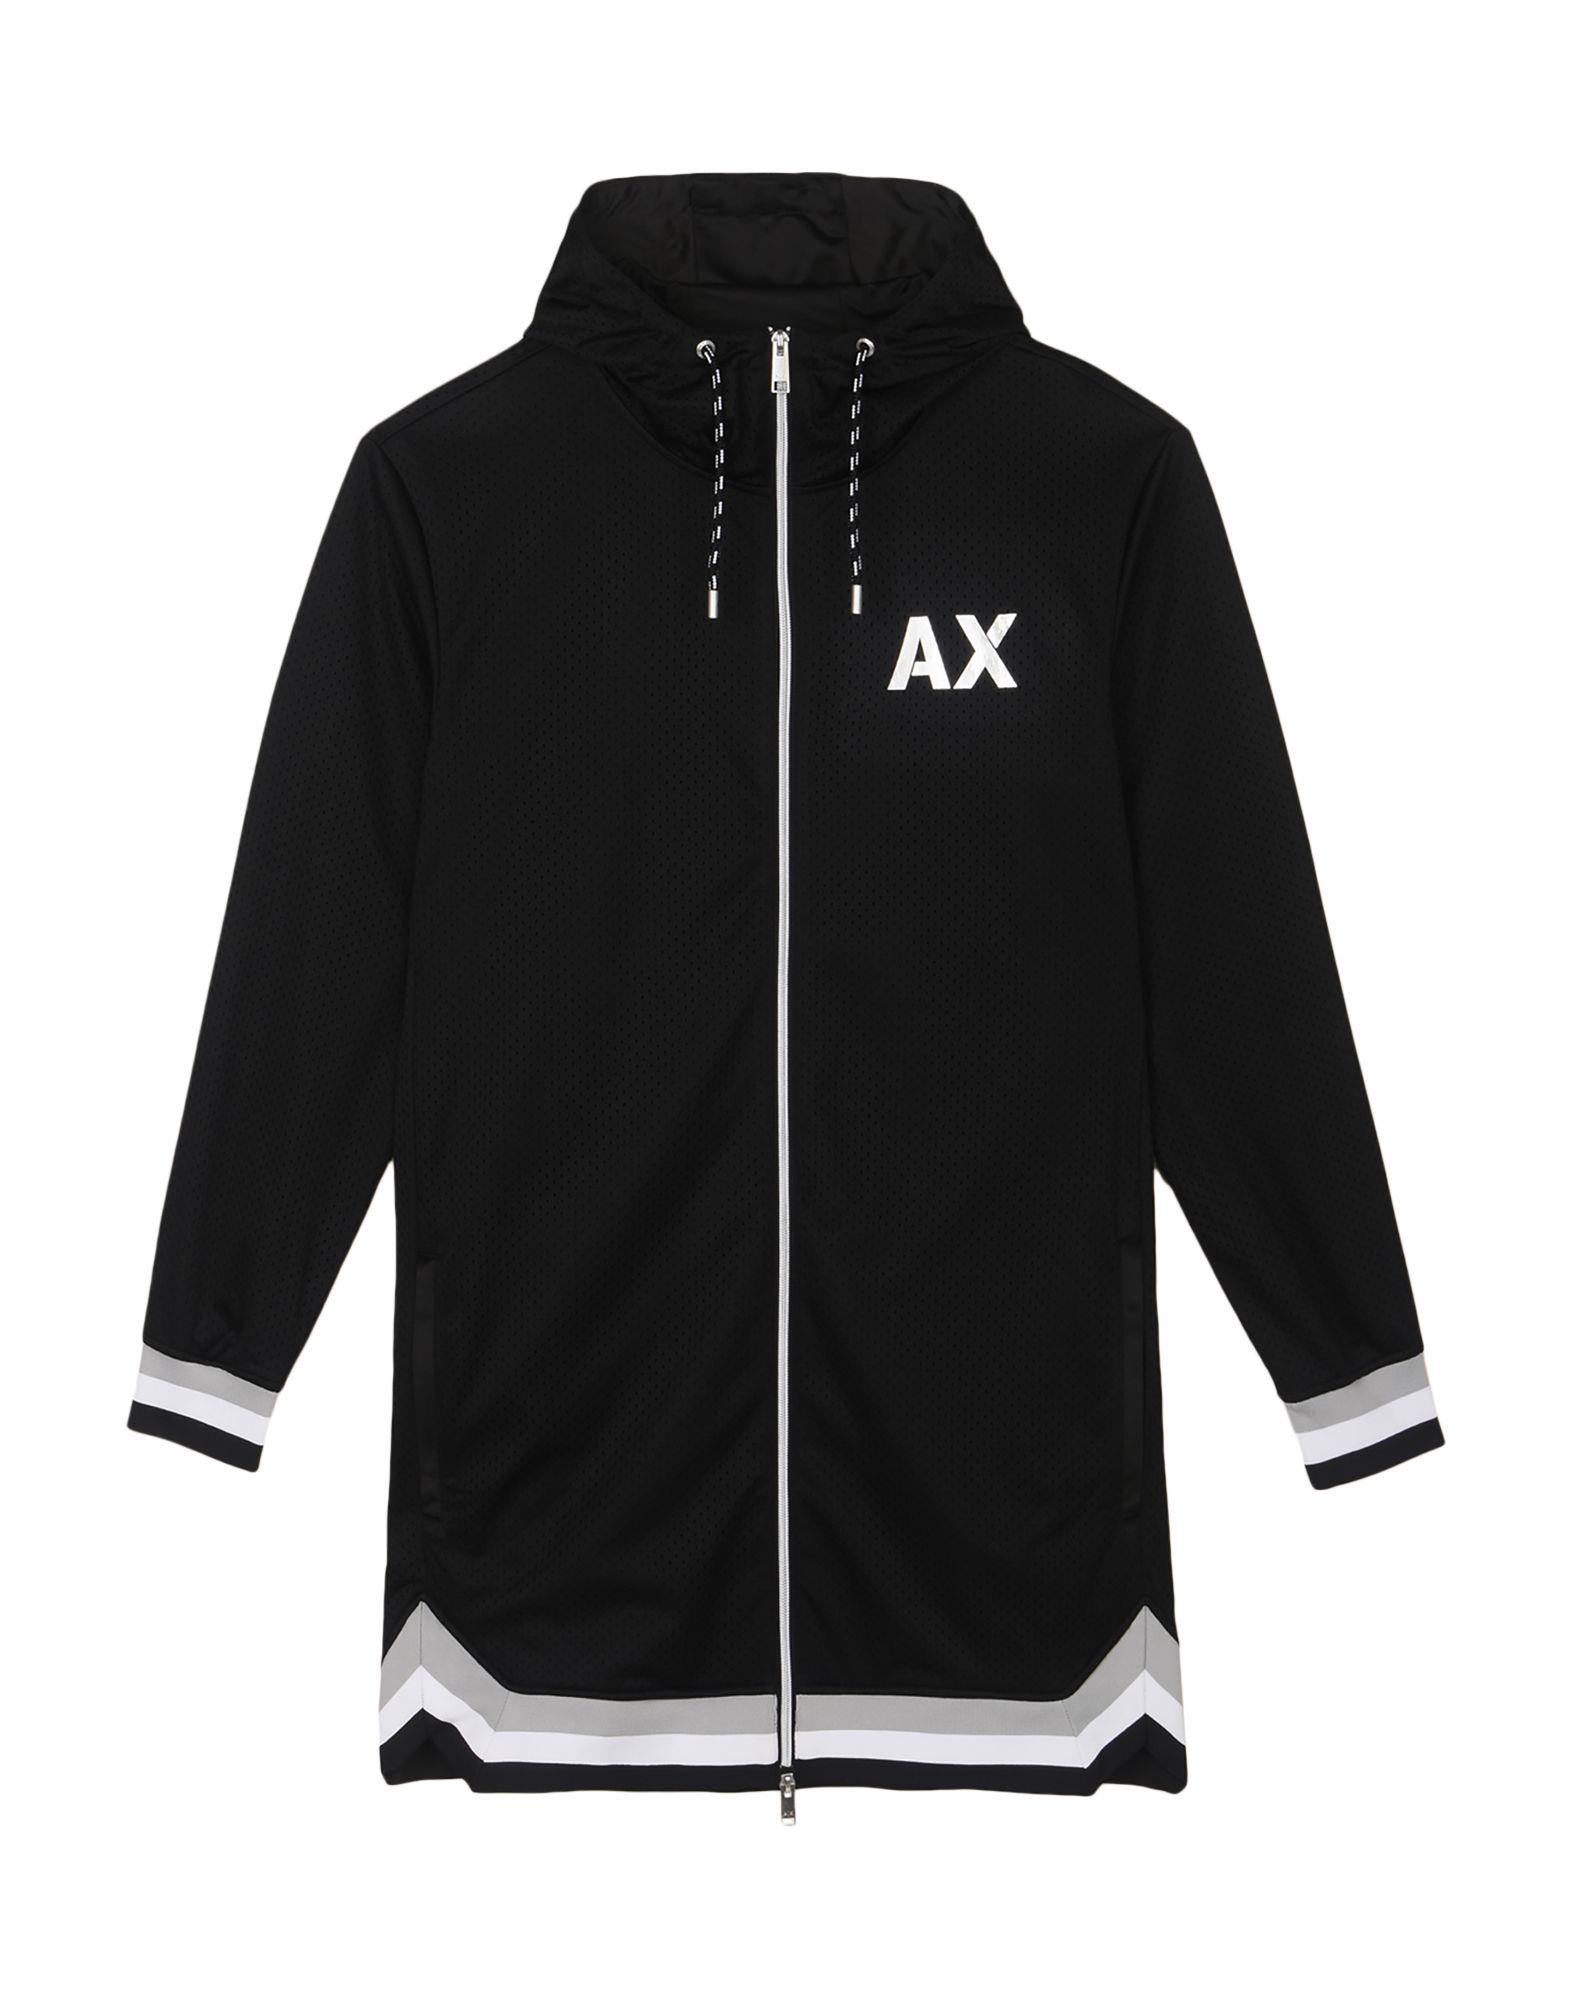 Armani Exchange Sweatshirt in Black for Men - Lyst